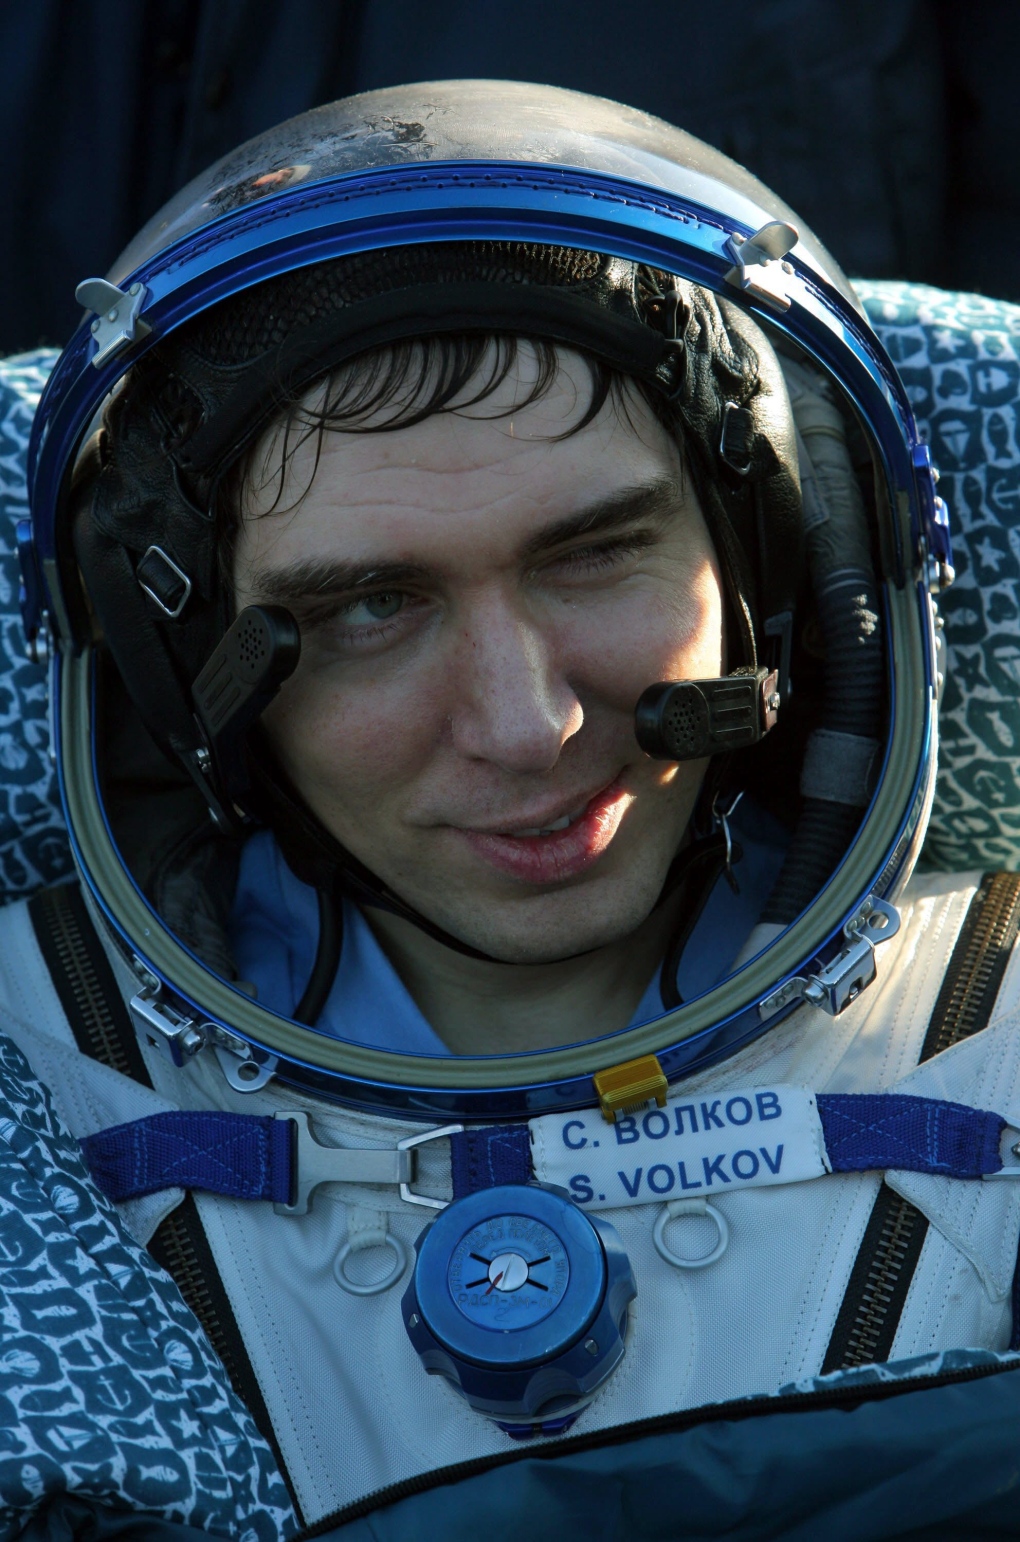 Russian cosmonaut Sergei Volkov in 2008